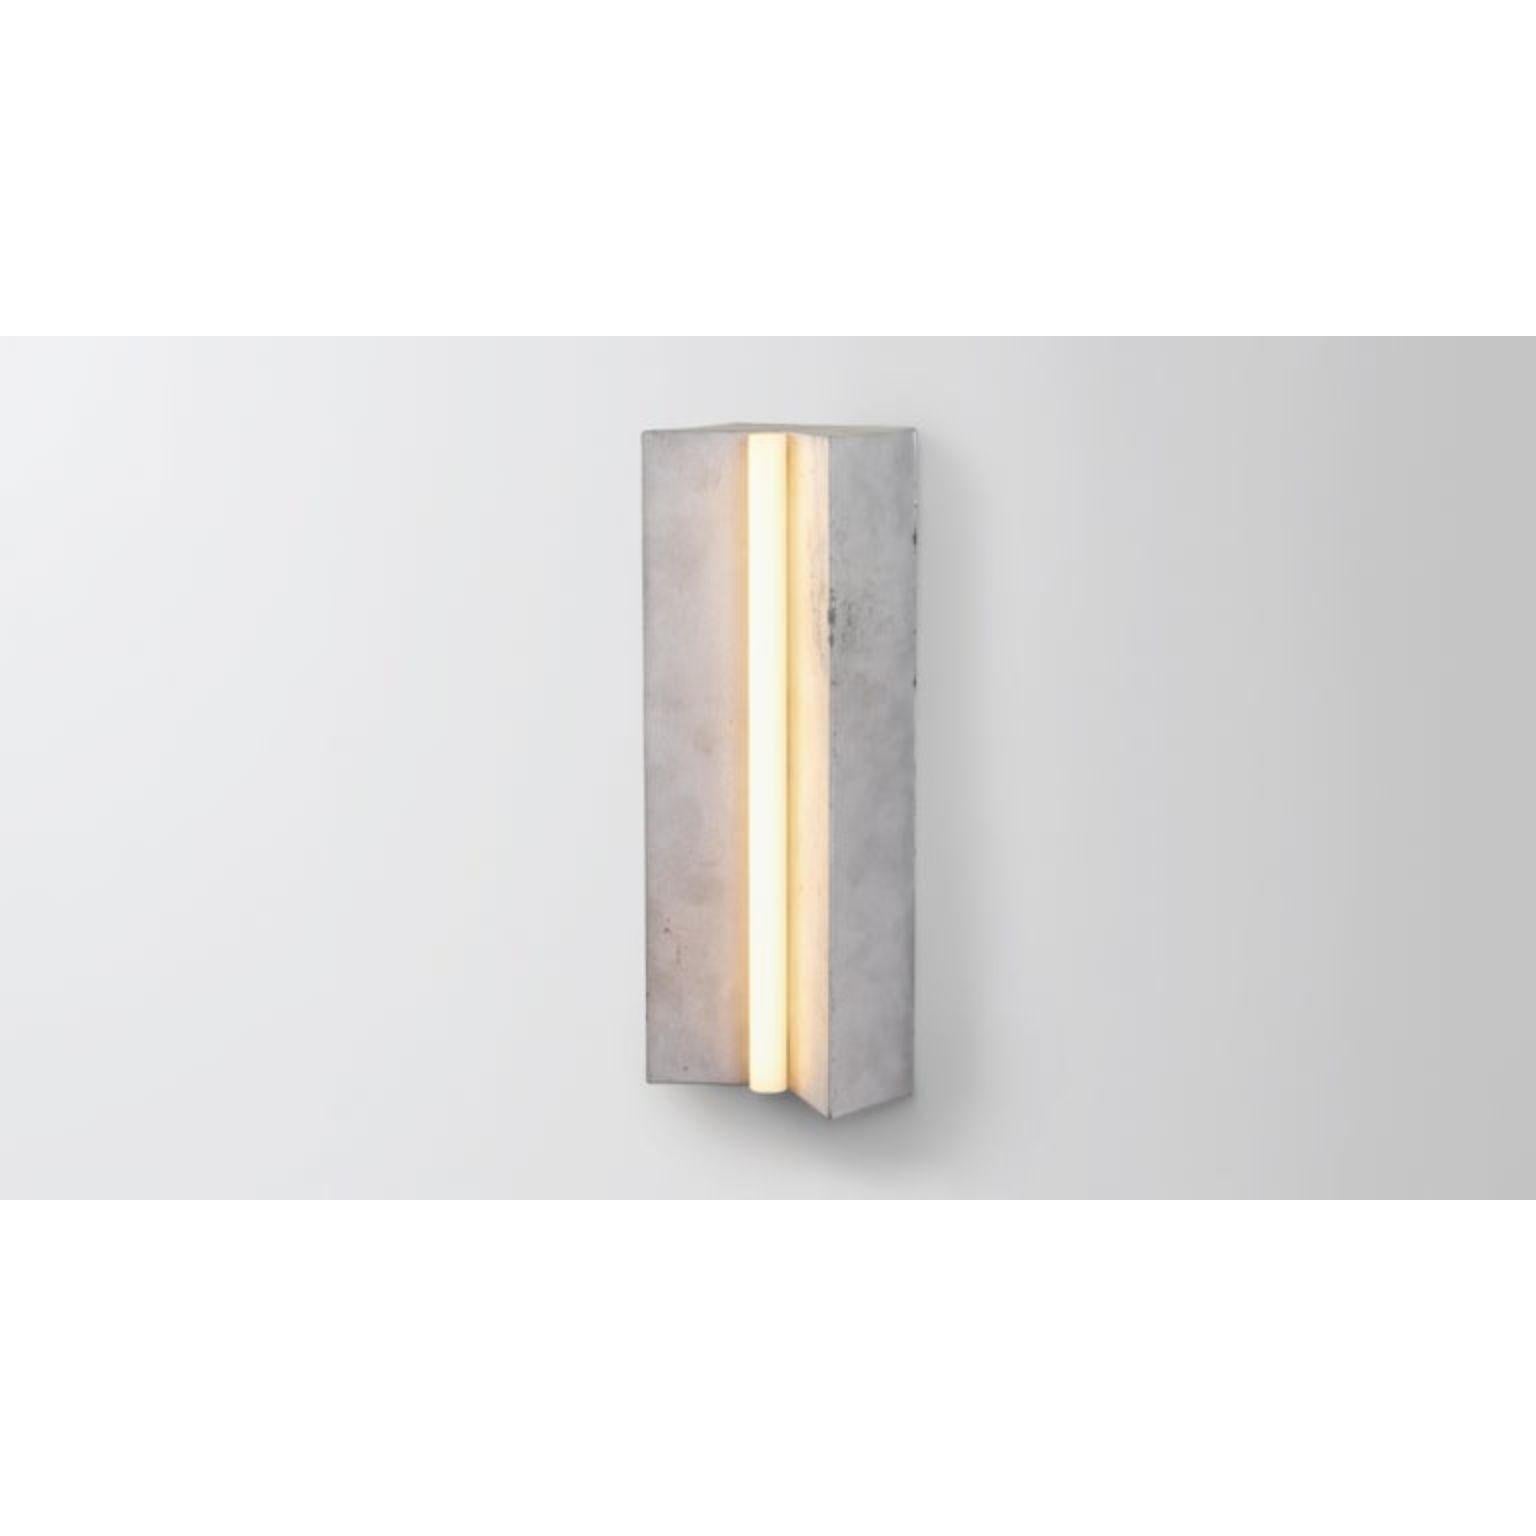 Longton in Aluminum by Volker Haug
Anton series
Dimensions: W 18 x H 51 x D 10 cm.
Materials: Cast Aluminum
Finish: Raw (Aluminium) 
Lamp: S14s LED, Opal (240V / 120V US)
Weight: 4kg 

Longton is cast as raw aluminium or polished gunmetal.
Form